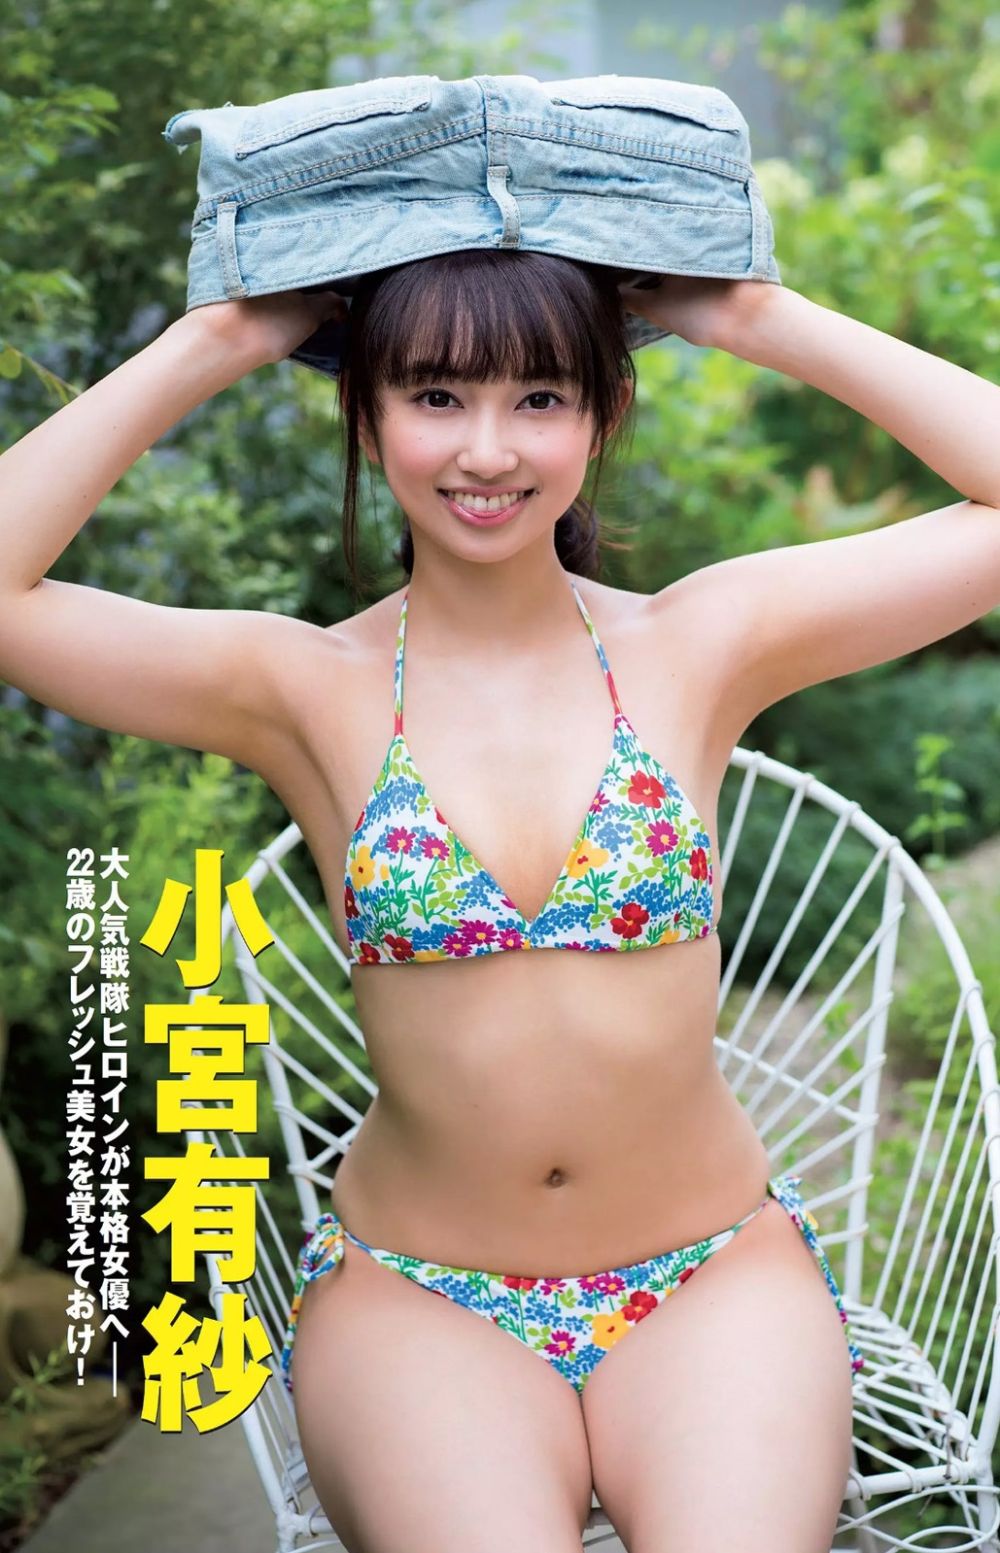 Arisa Komiya Sexy and Hottest Photos , Latest Pics